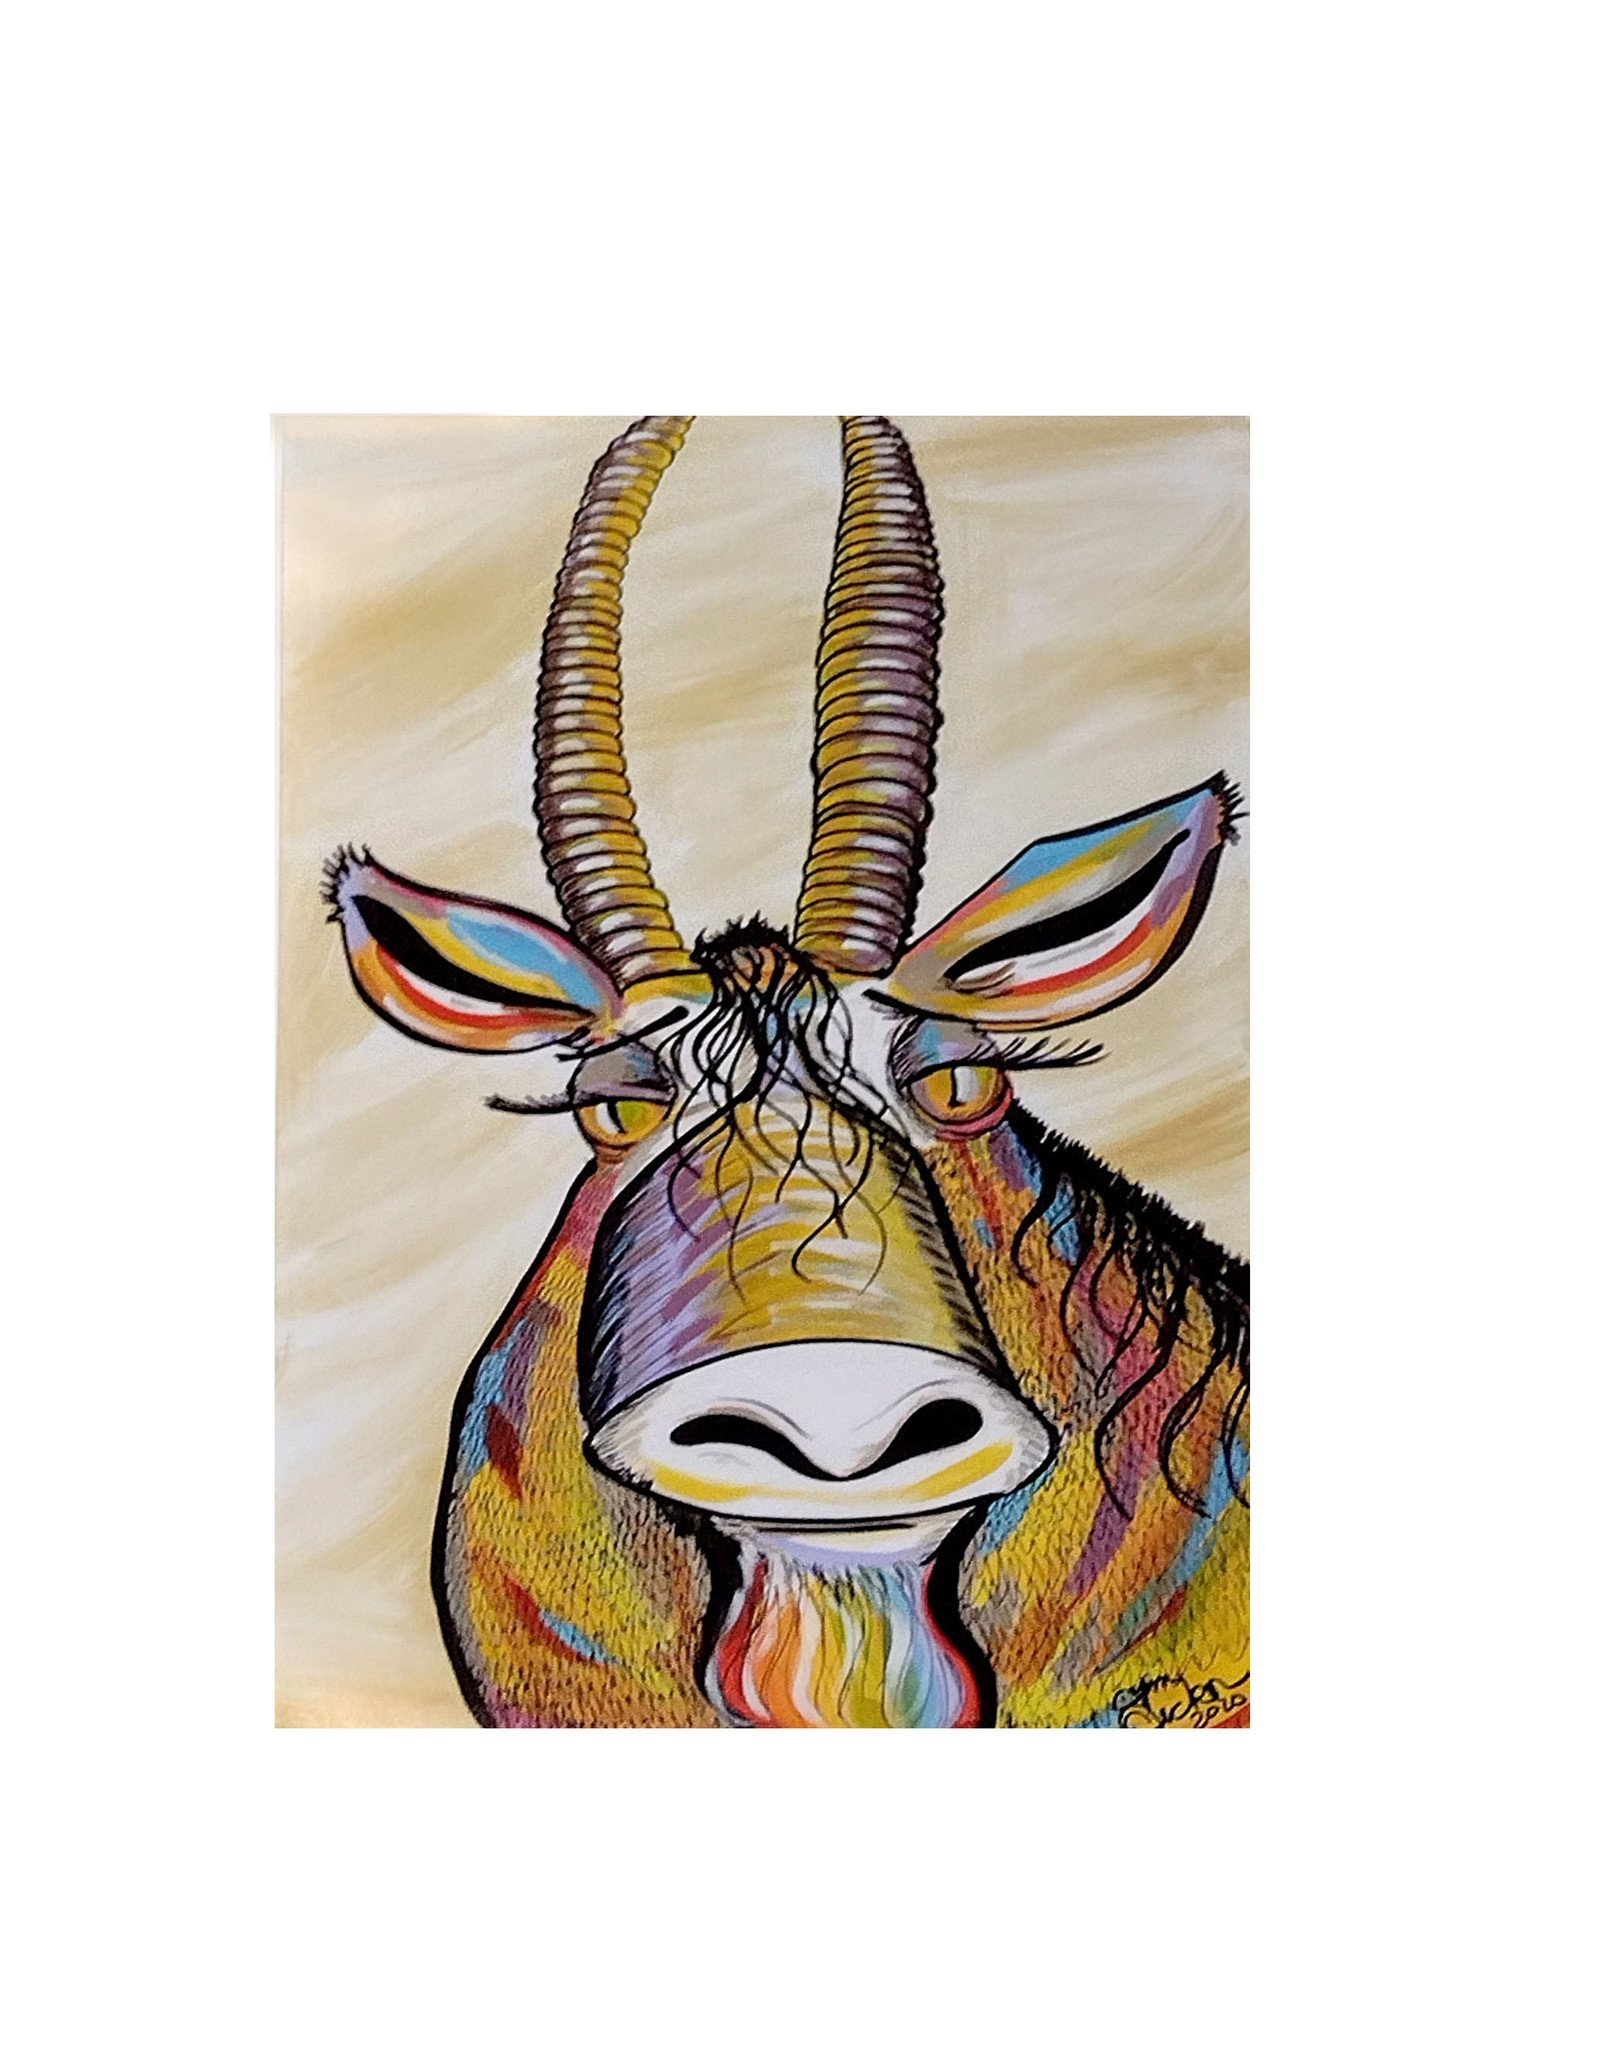 "Rainbow Oryx" print by Tim Decker